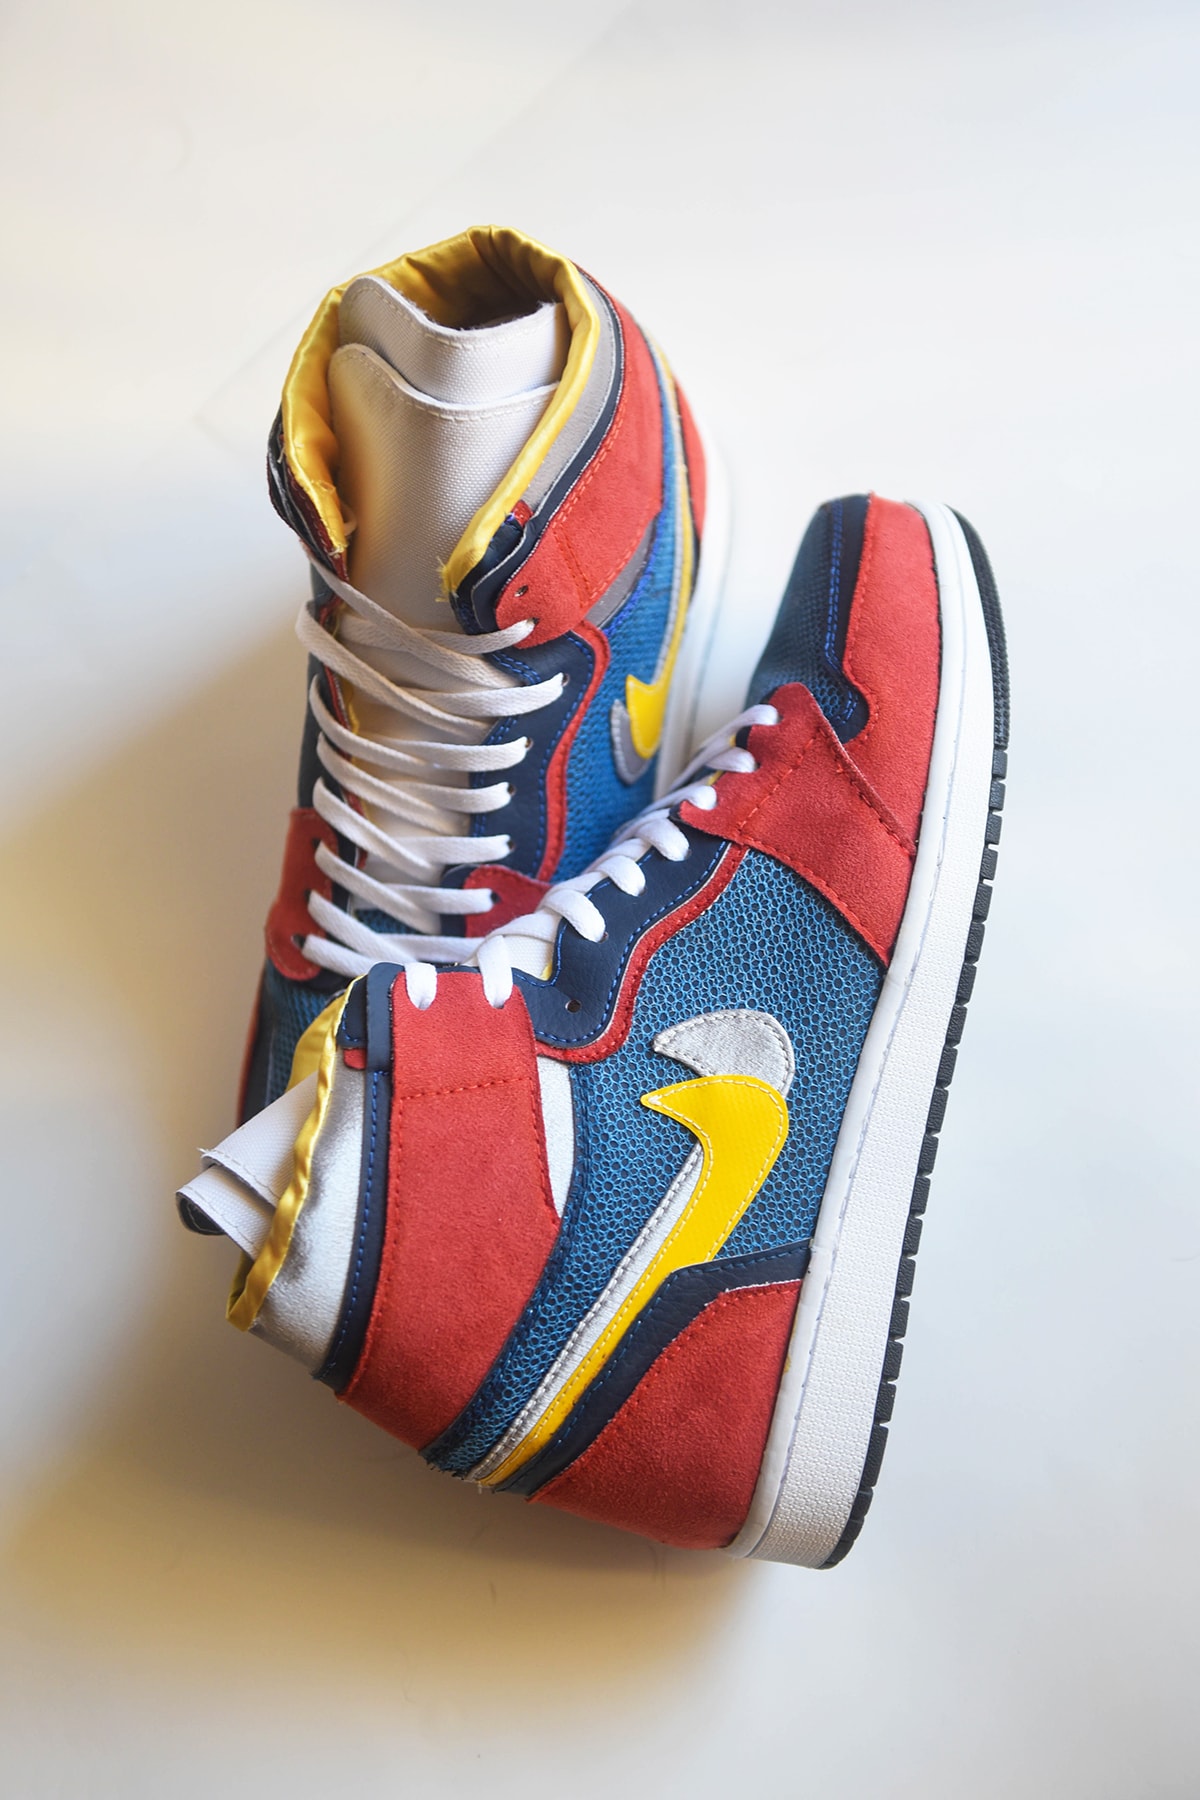 AMAC Customs 以 sacai x Nike 為靈感打造 Air Jordan 1 High 客製鞋款